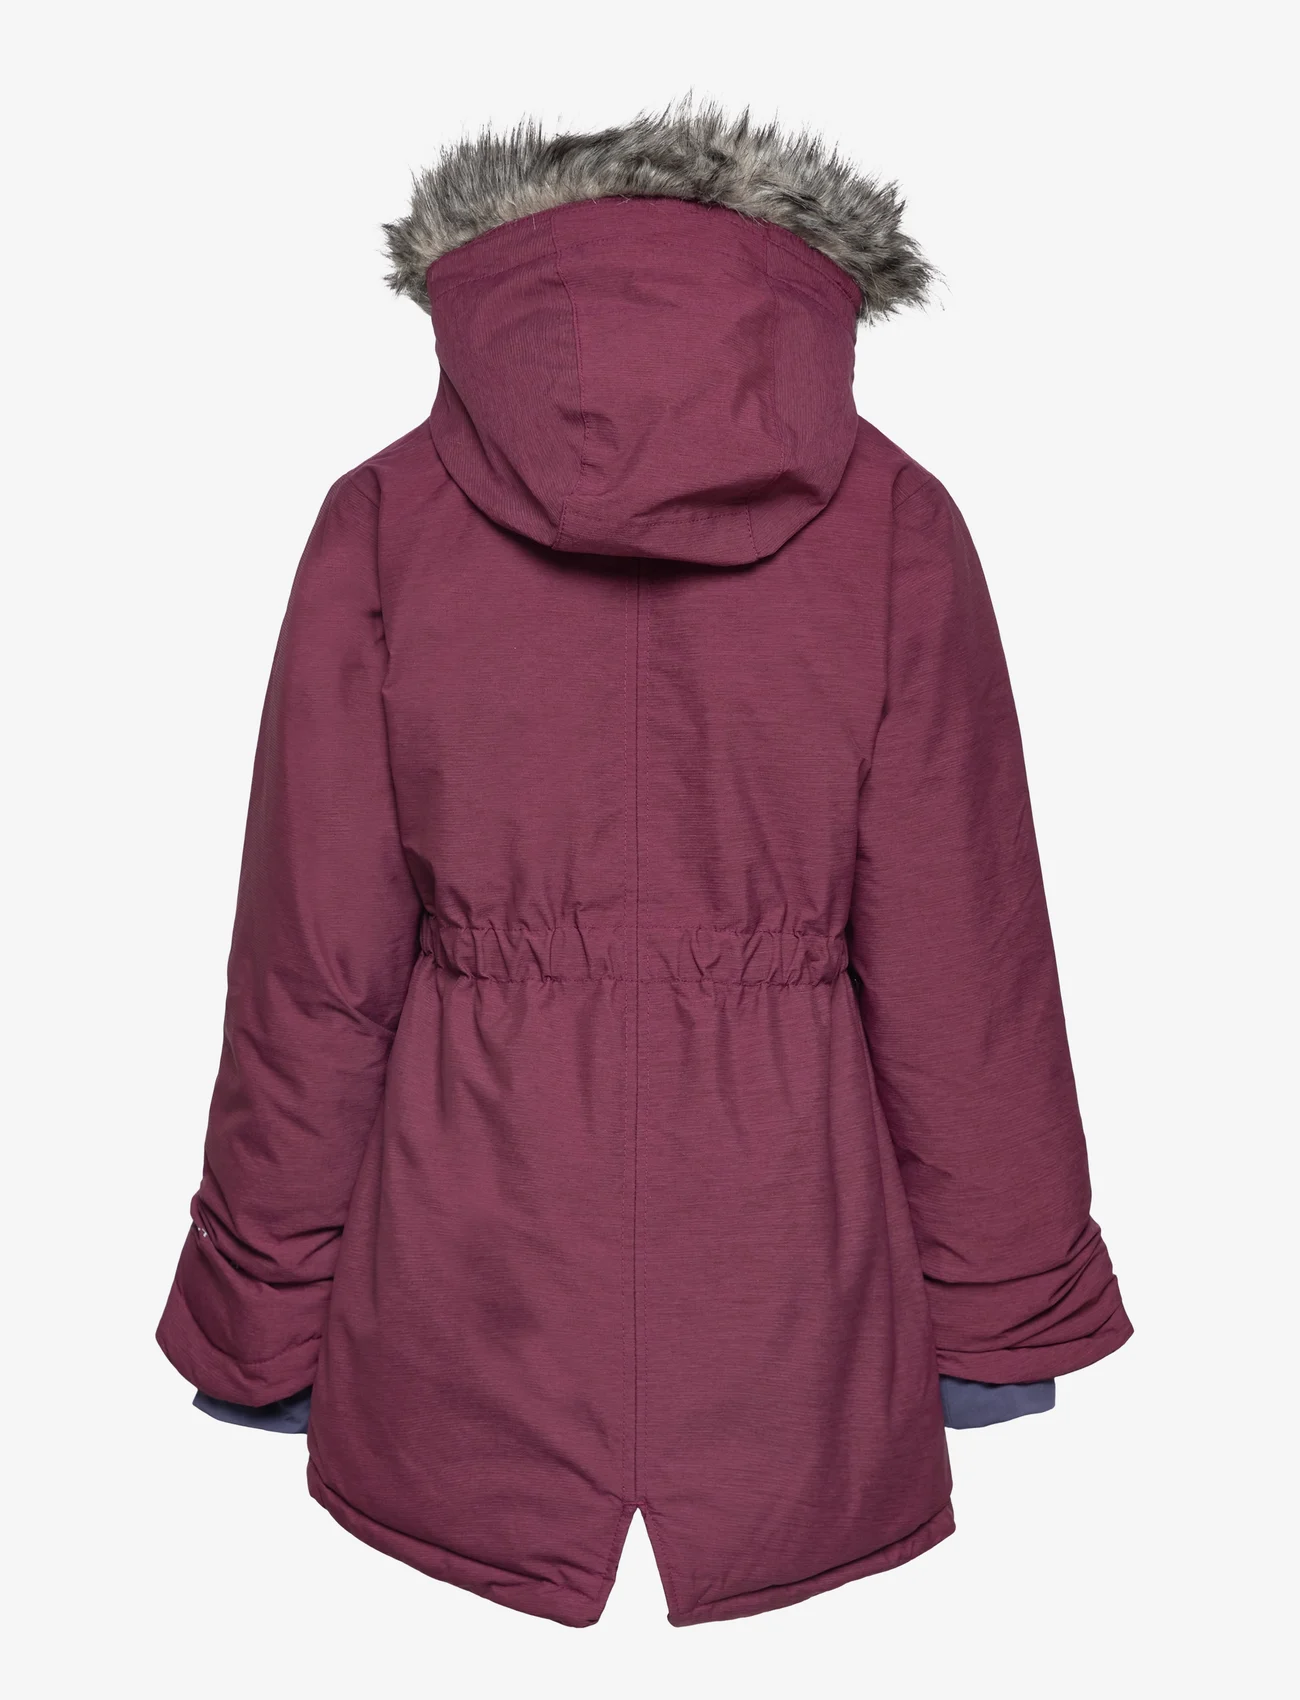 Columbia Sportswear - Nordic Strider Jacket - isolerede jakker - marionberry heather - 1